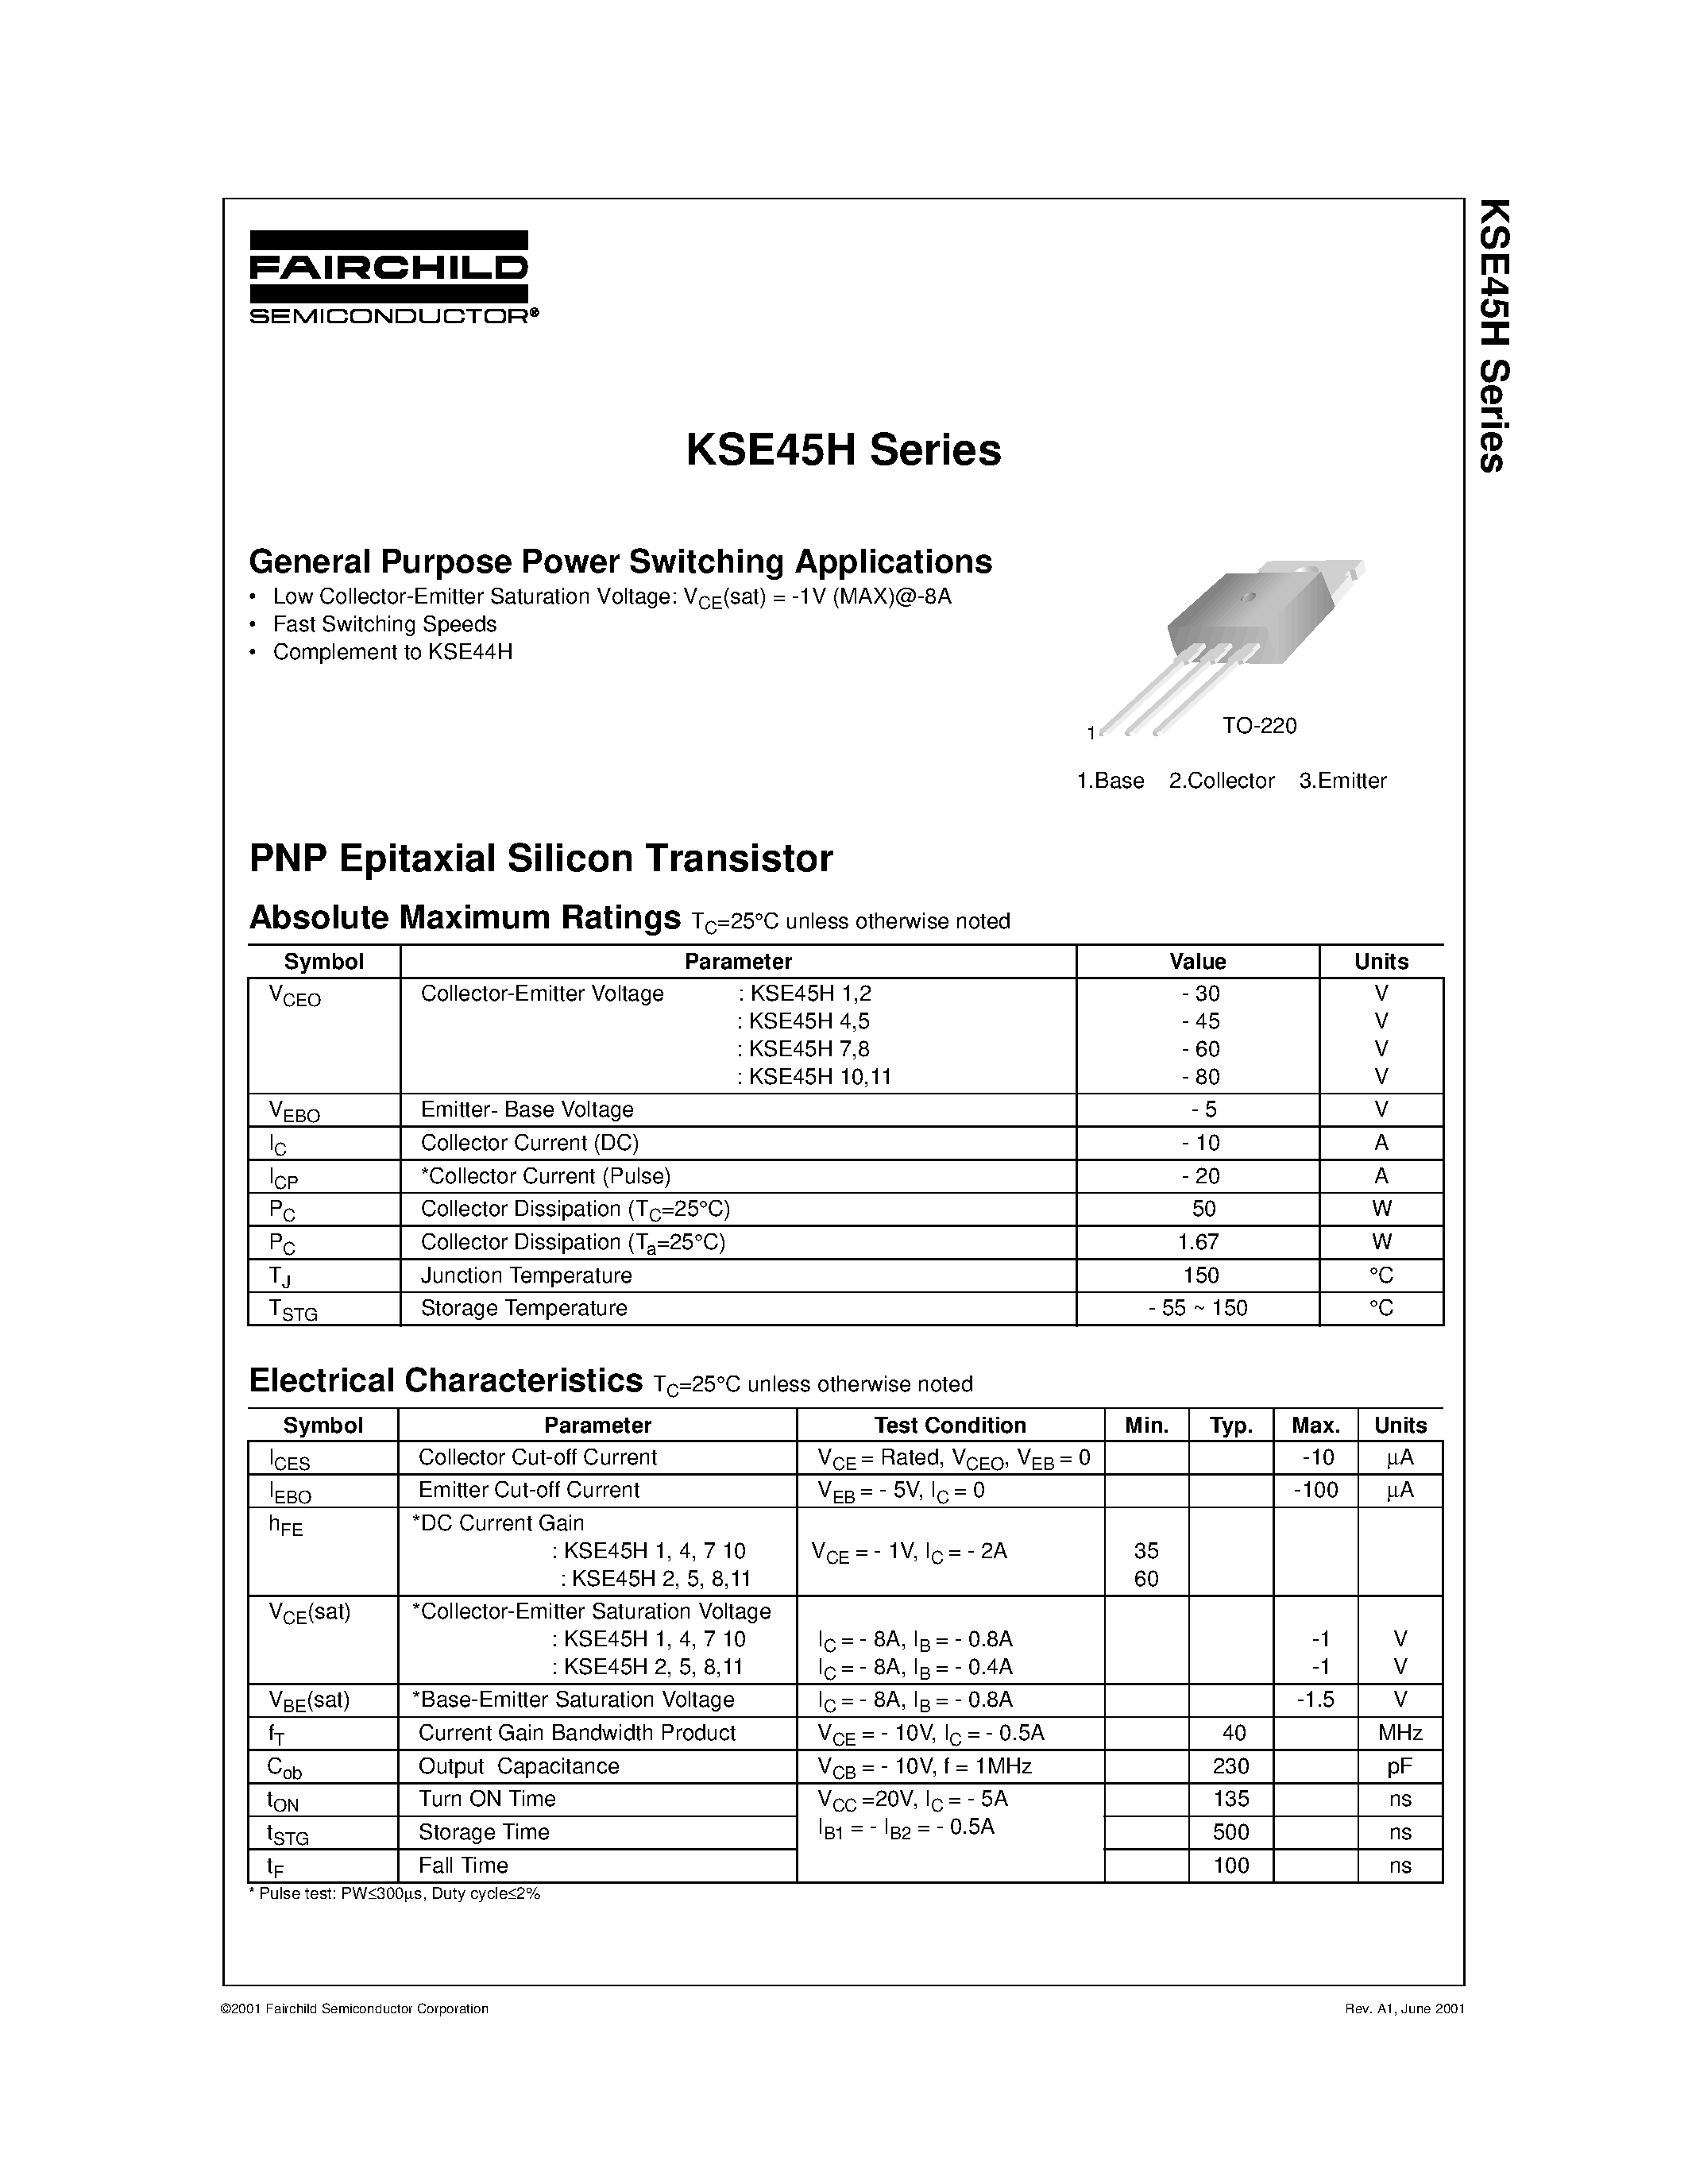 Datasheet KSE45H4 - General Purpose Power Switching Applications page 1